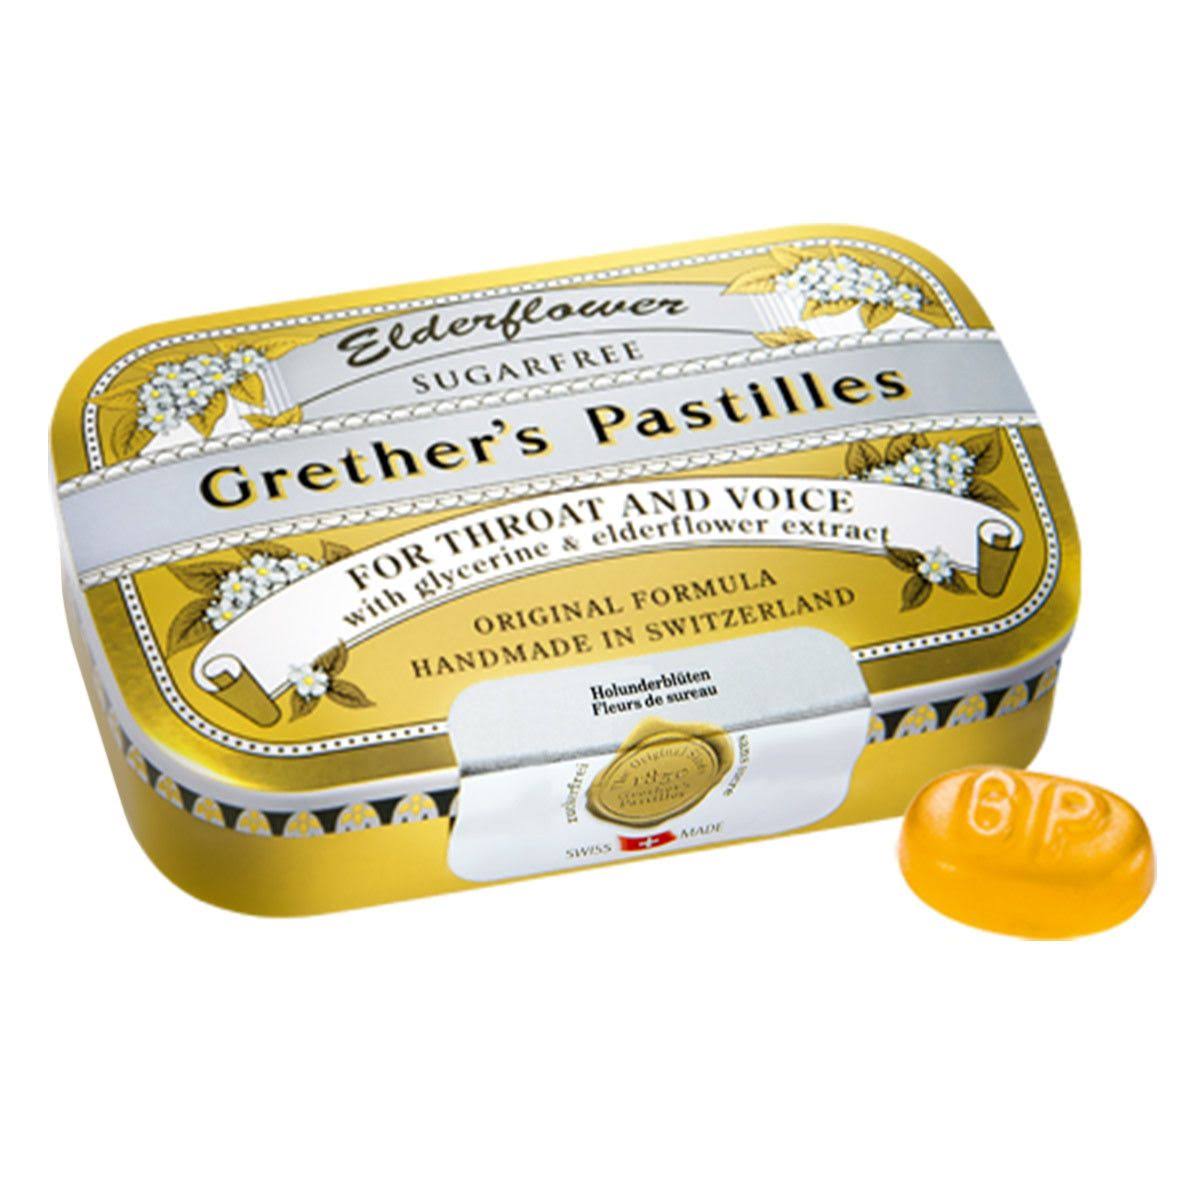 Grether's Pastilles Sugar Free Elderflower Pastilles - 2.125oz